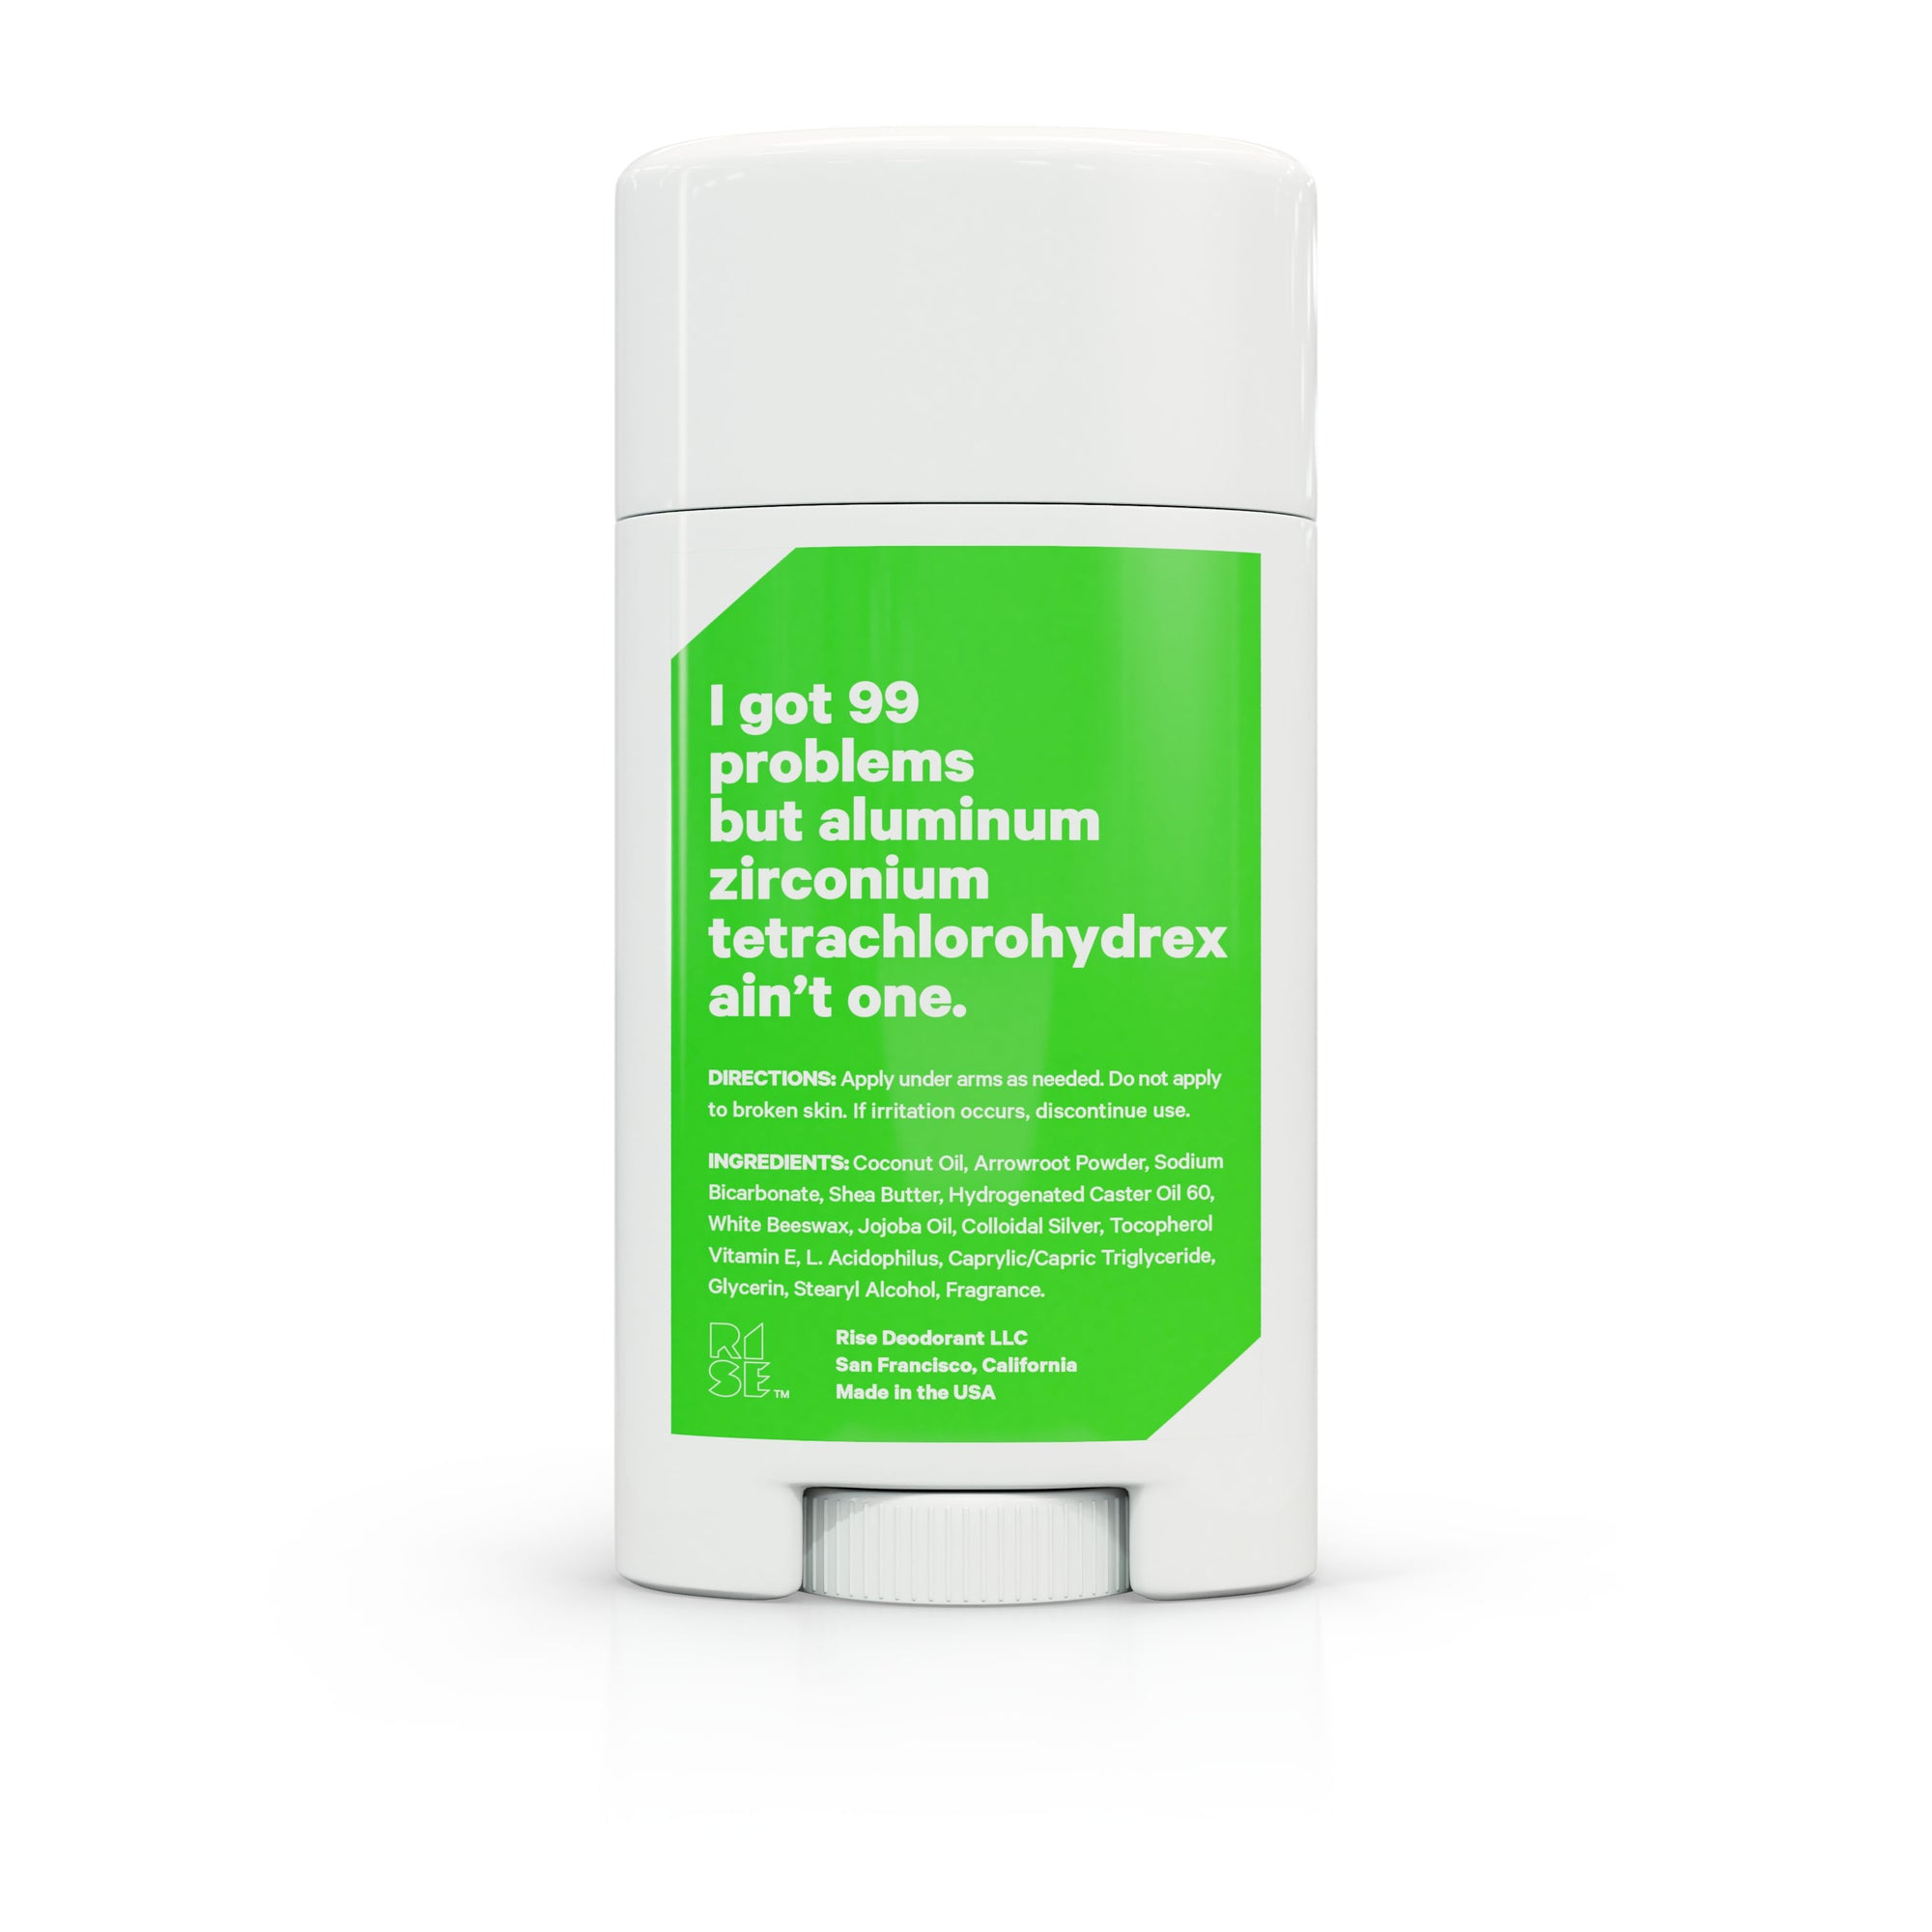 RISE- Powerful, natural deodorant - Wilderness Mint